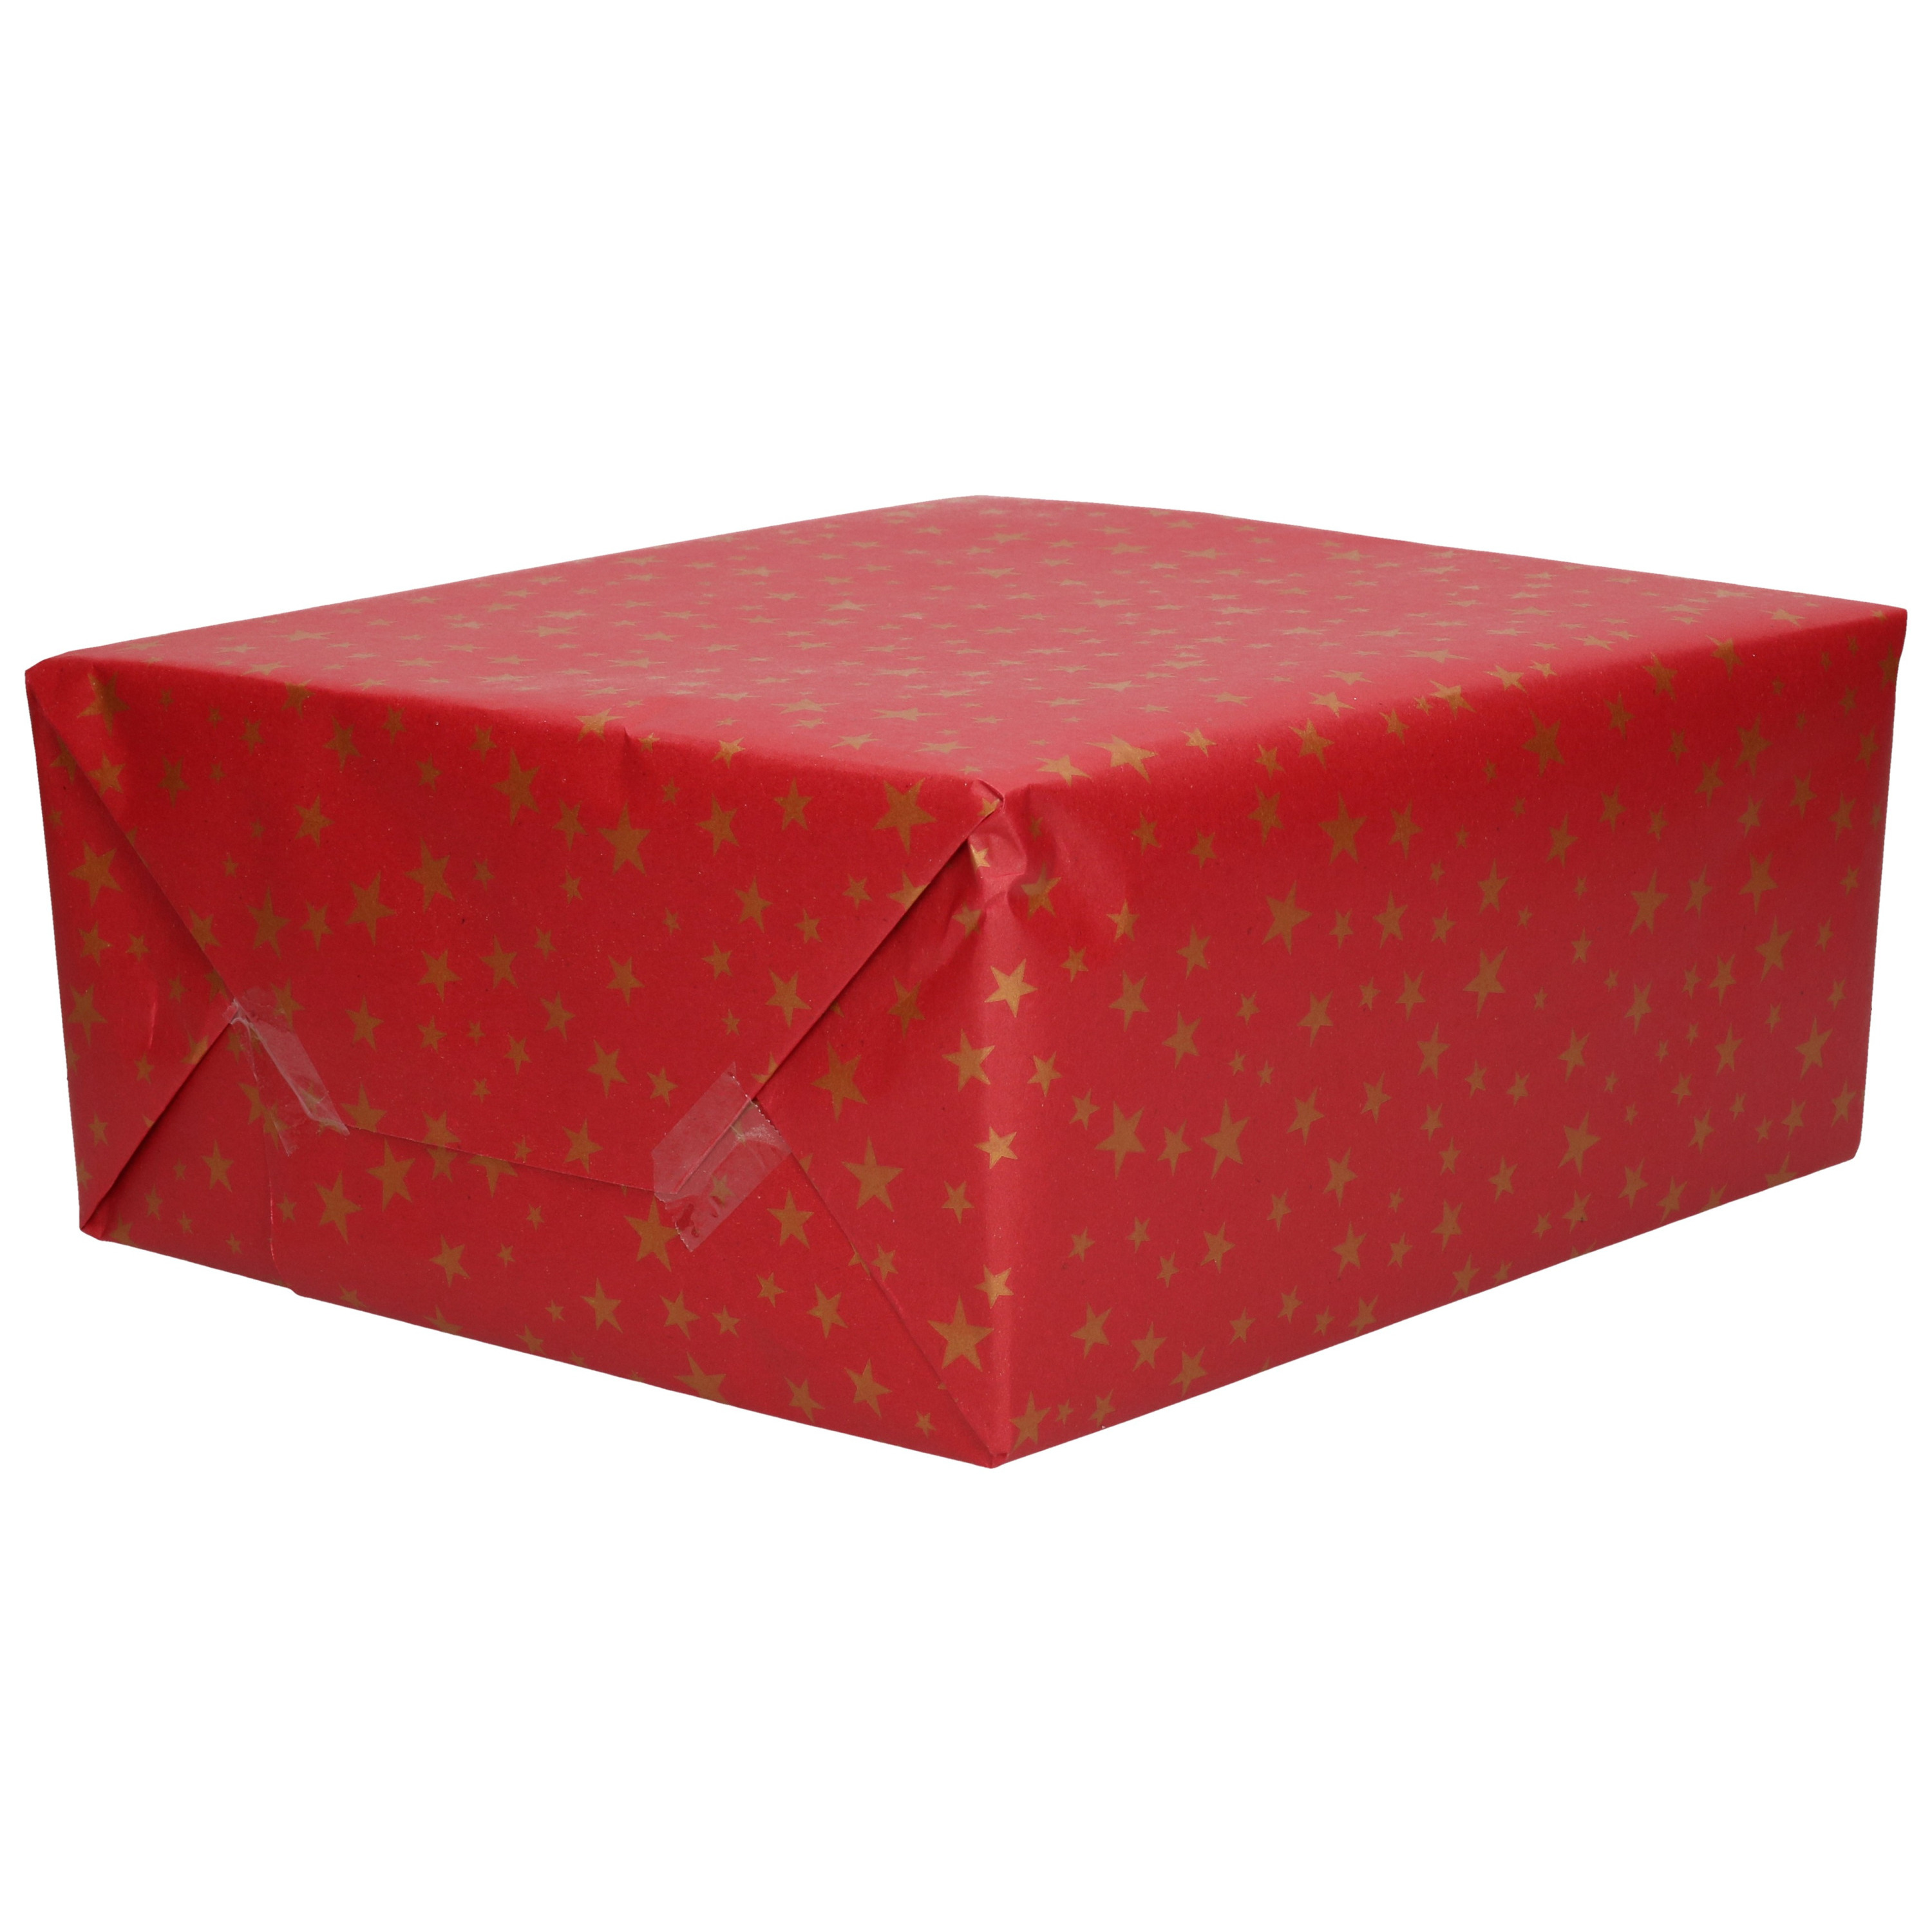 2x Rollen Kerst inpakpapier/cadeaupapier bordeaux rood 2,5 x 0,7 meter